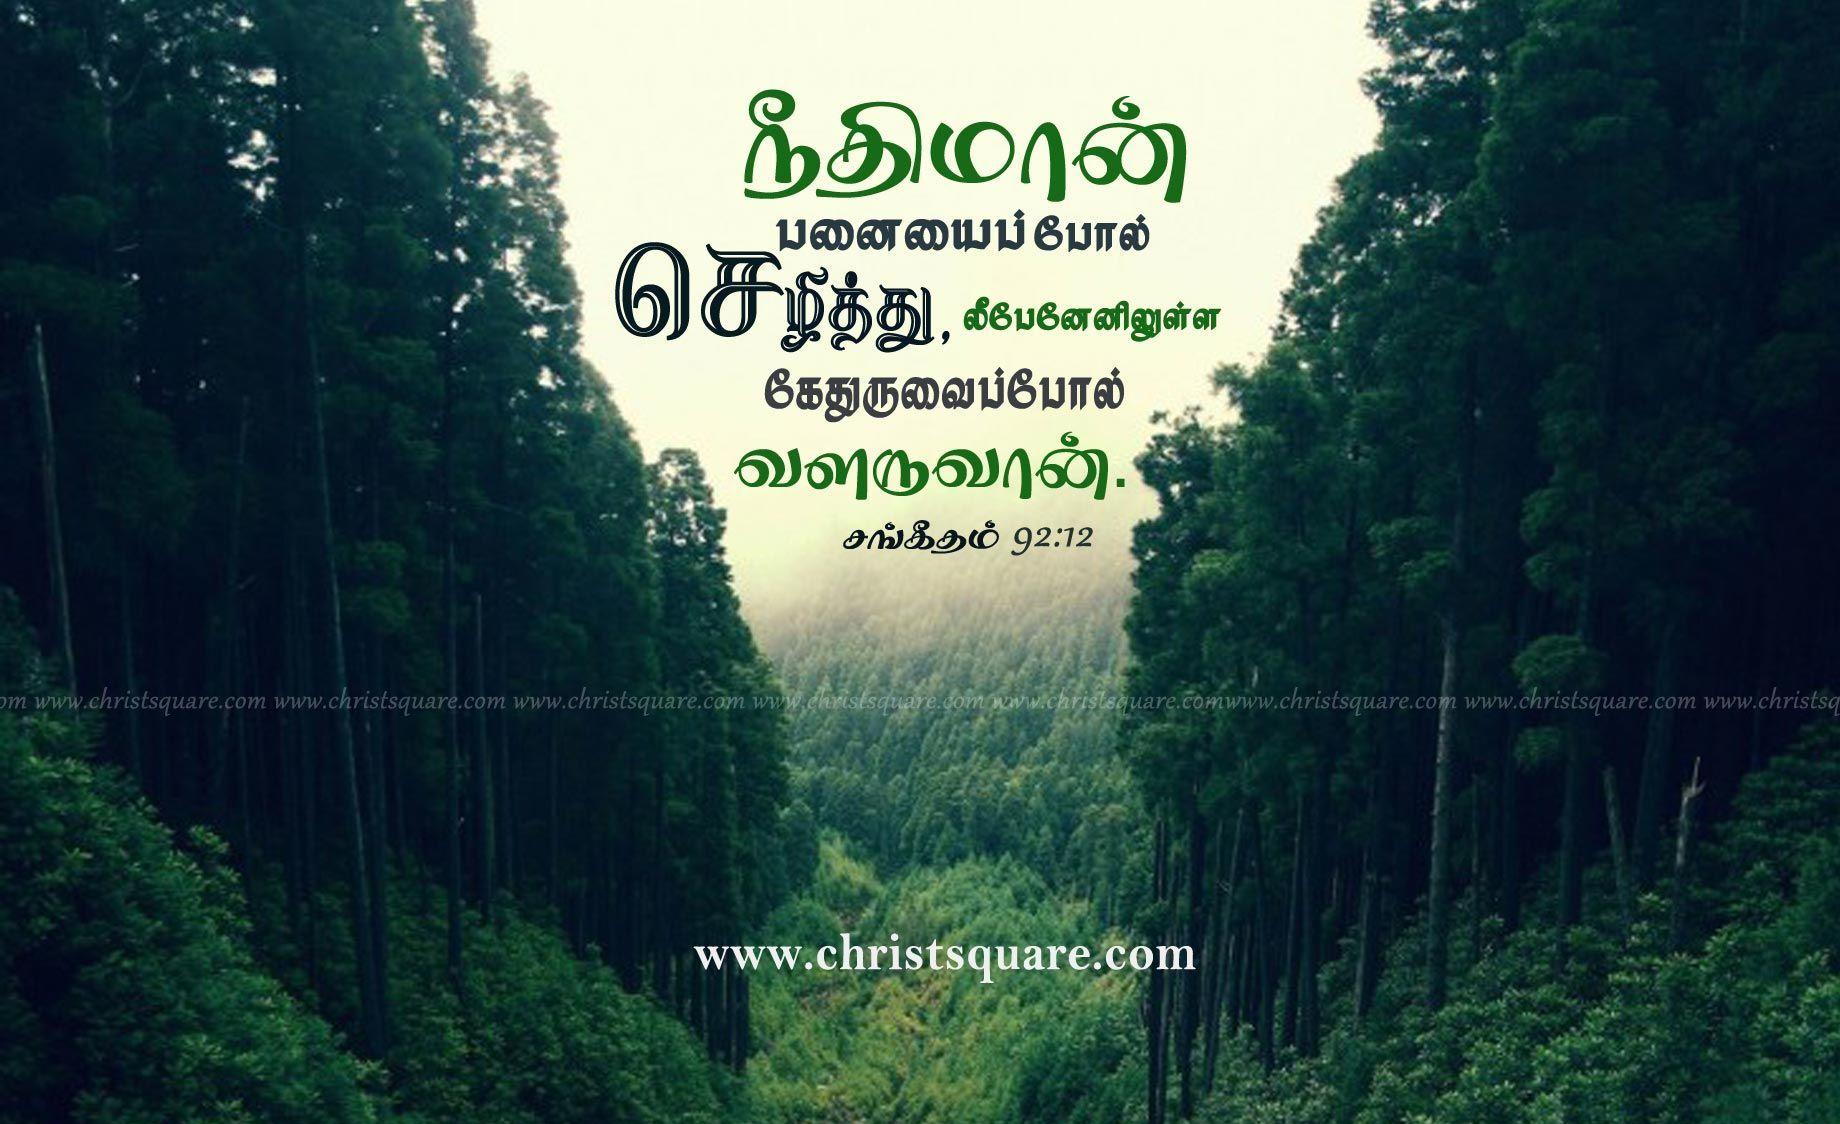 Tamil Bible Verses Images  Gideon Aruldoss jesus171996 on ShareChat